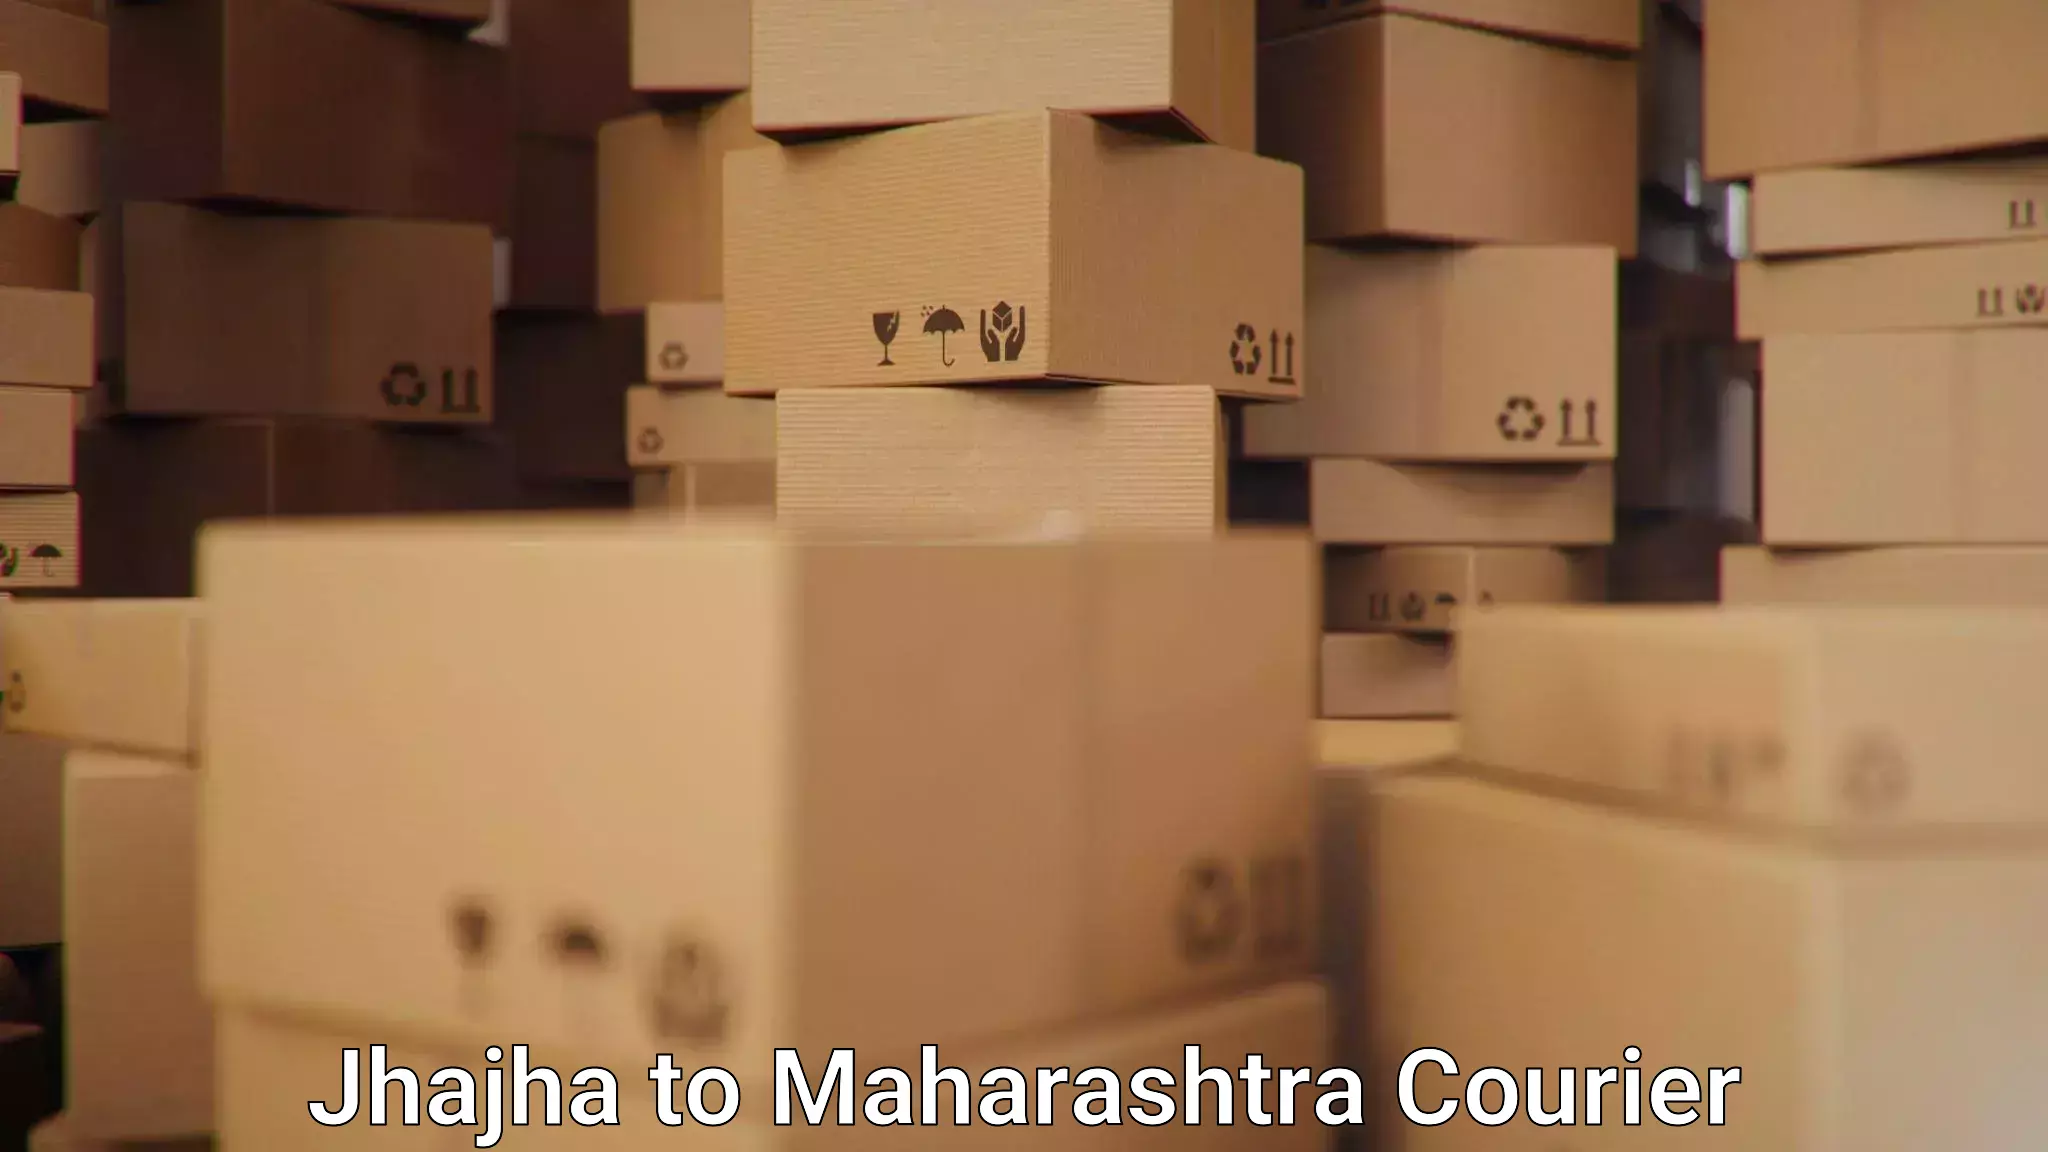 Budget-friendly shipping Jhajha to Pune